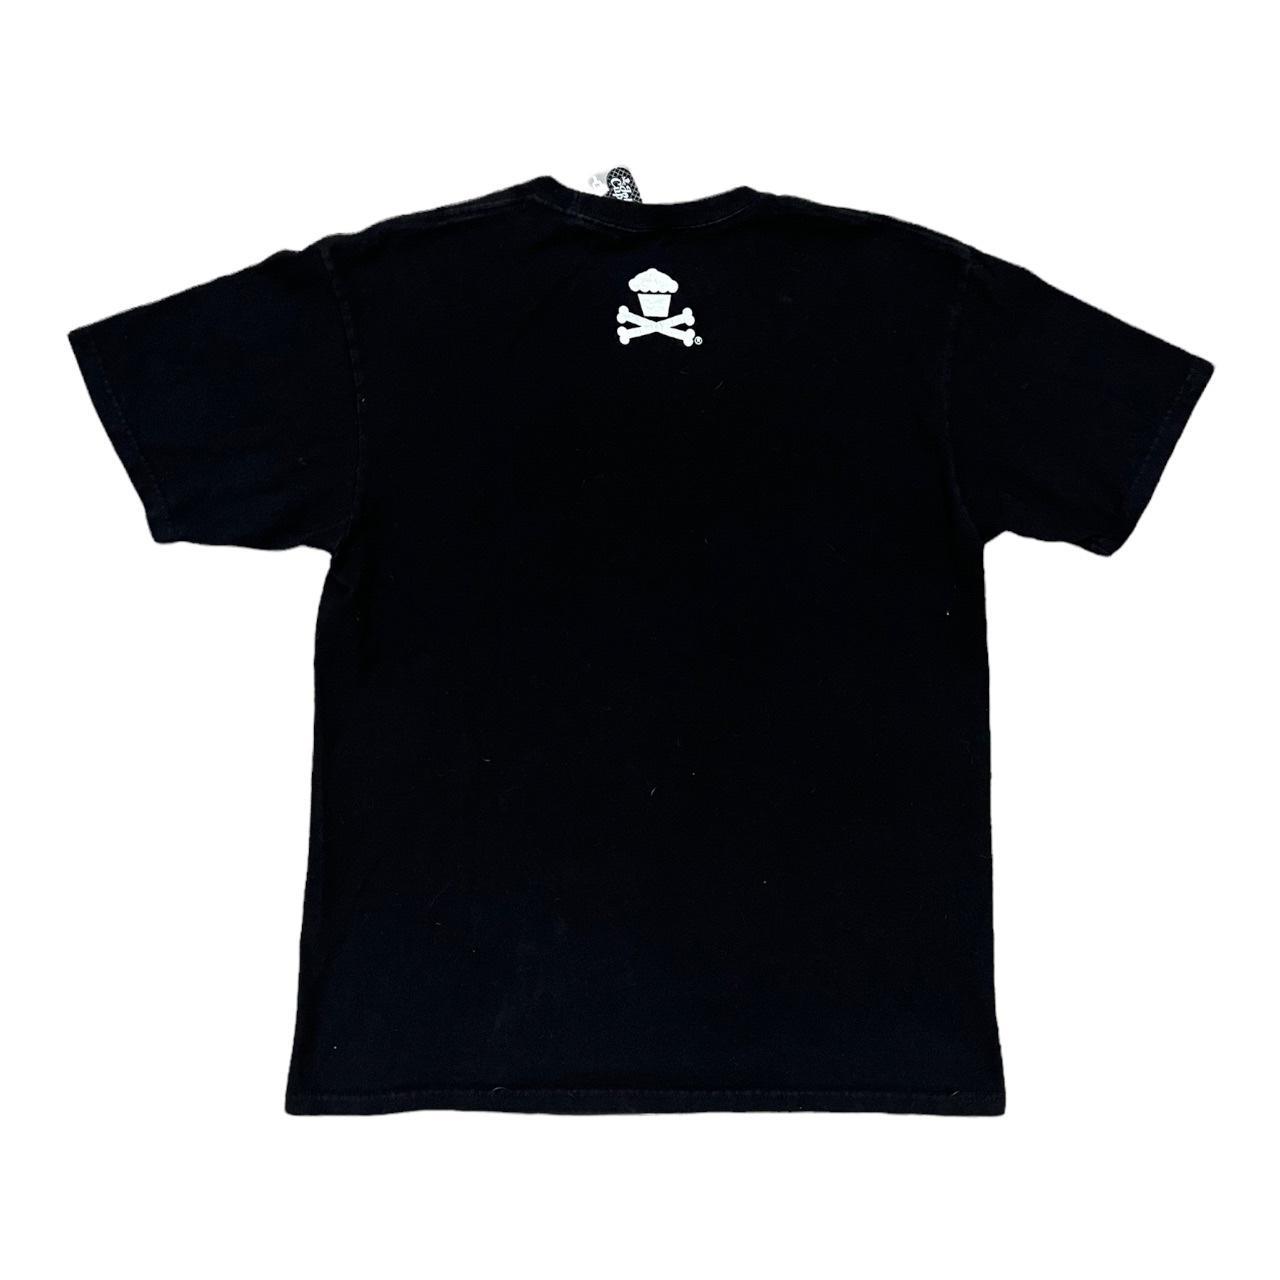 Product Image 2 - Johnny Cupcakes Venom T-Shirt
Size: M